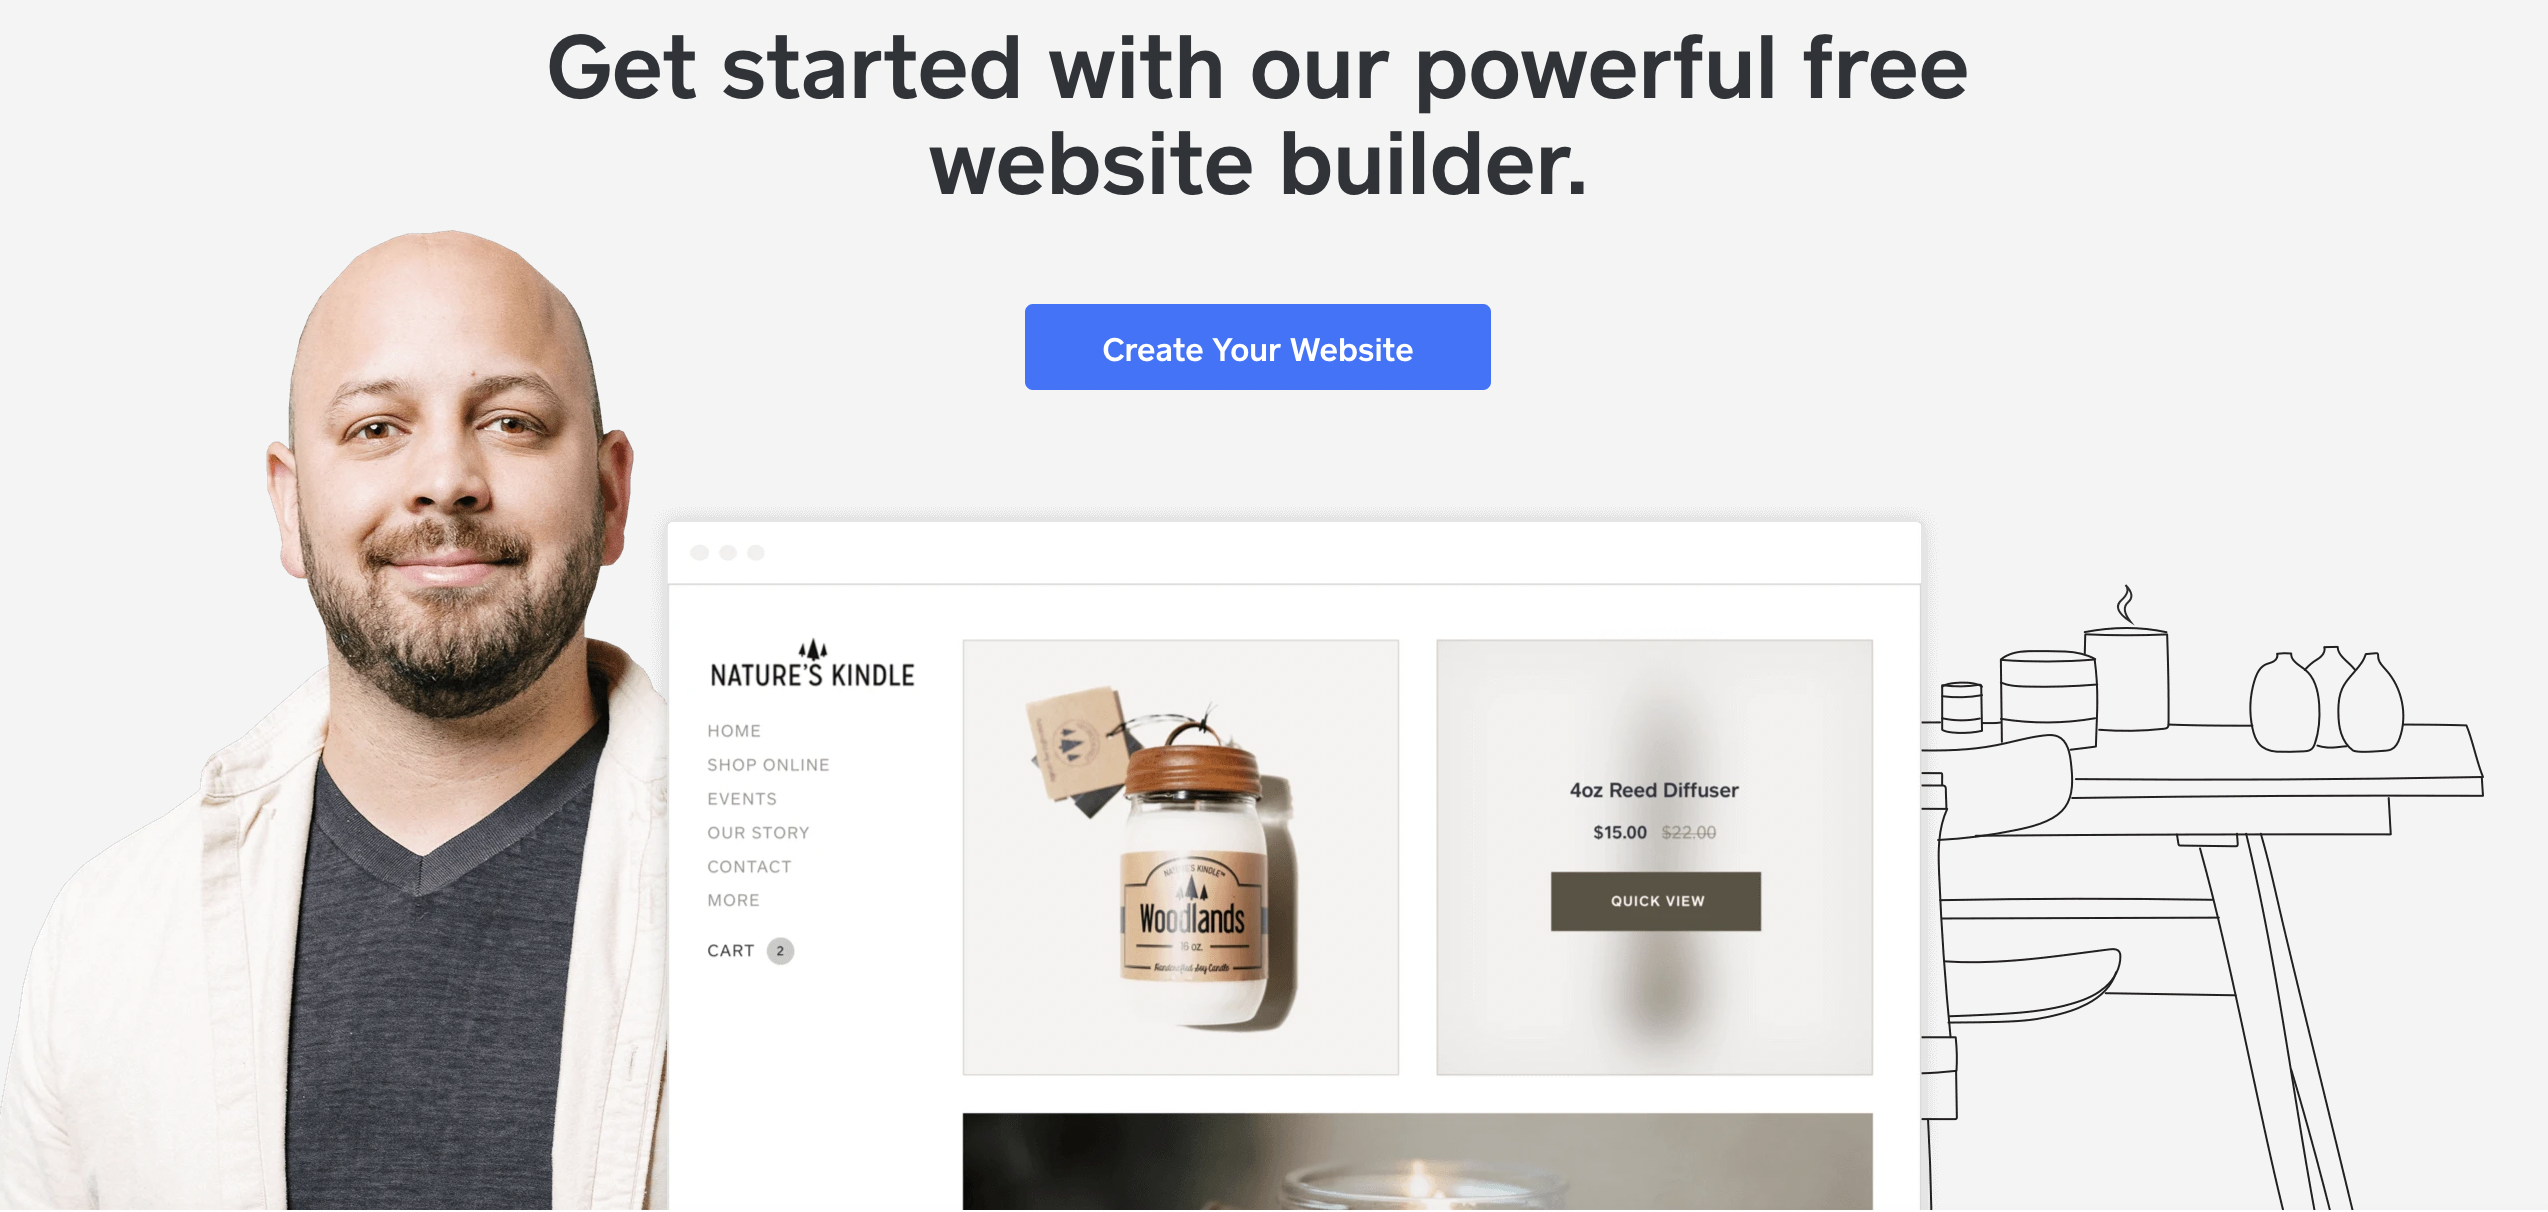 Weebly is an excellent art portfolio website platform